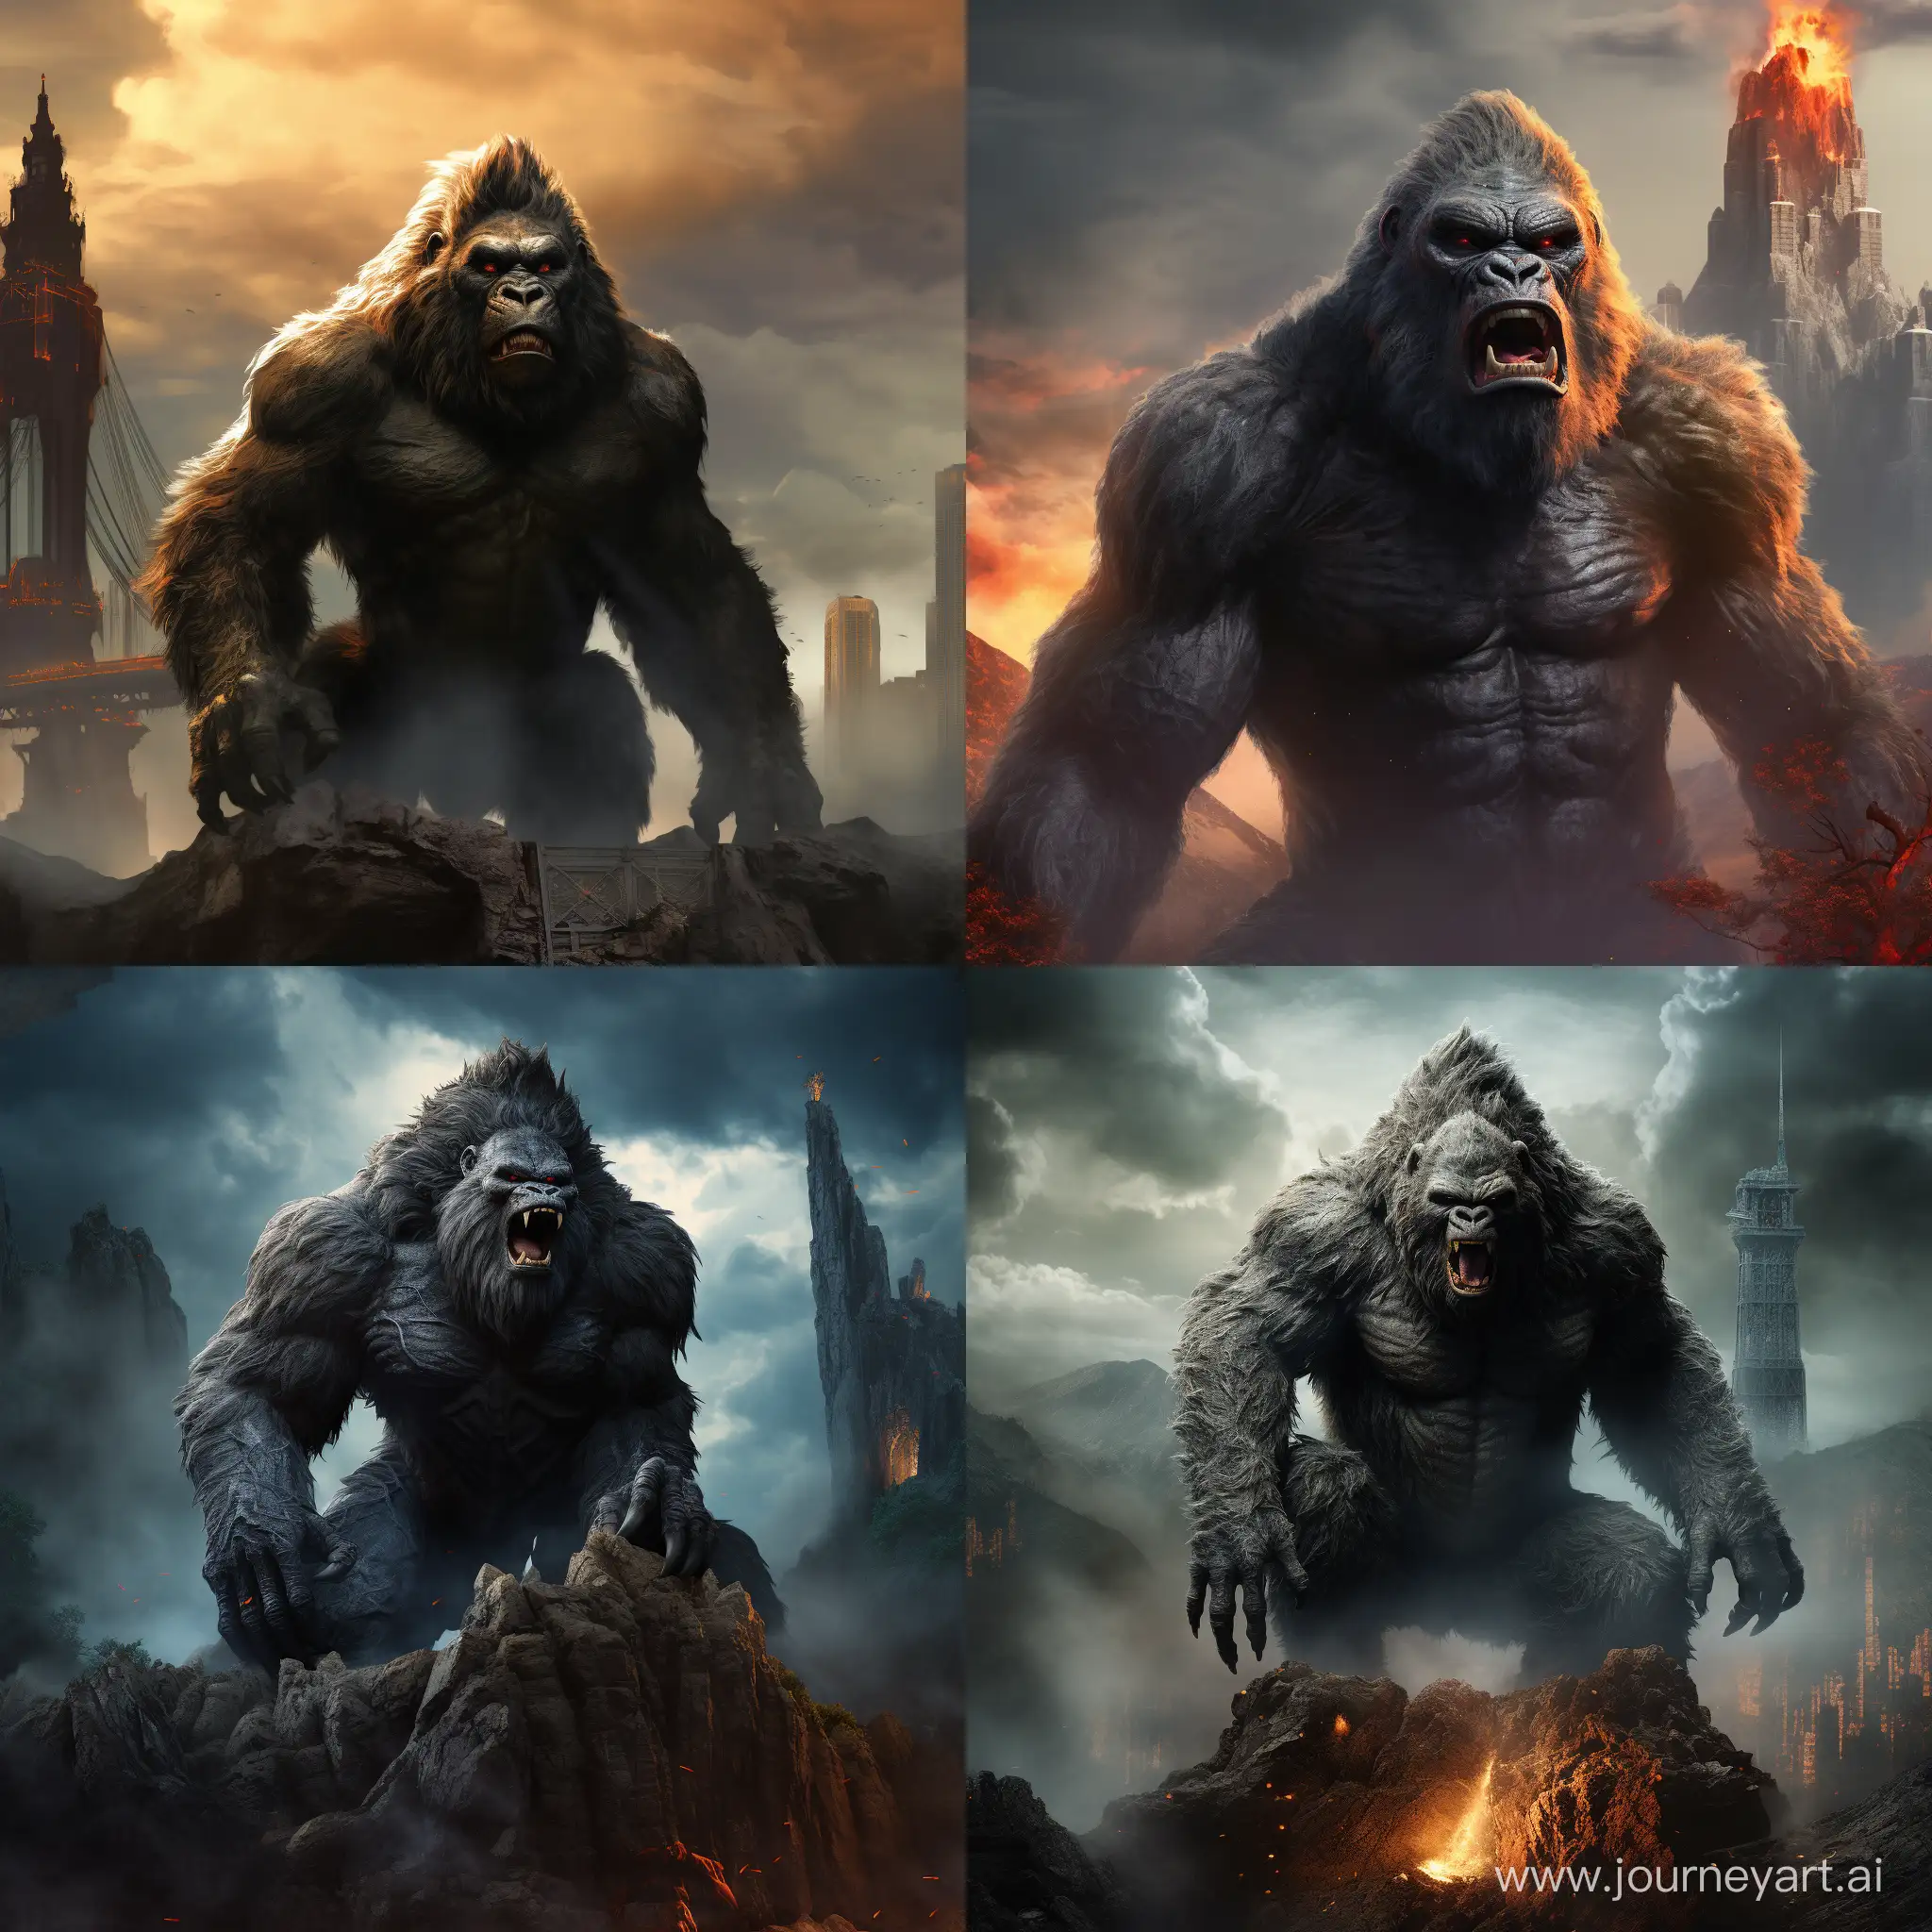 Giant-Ape-King-Kong-Roaring-in-a-Cityscape